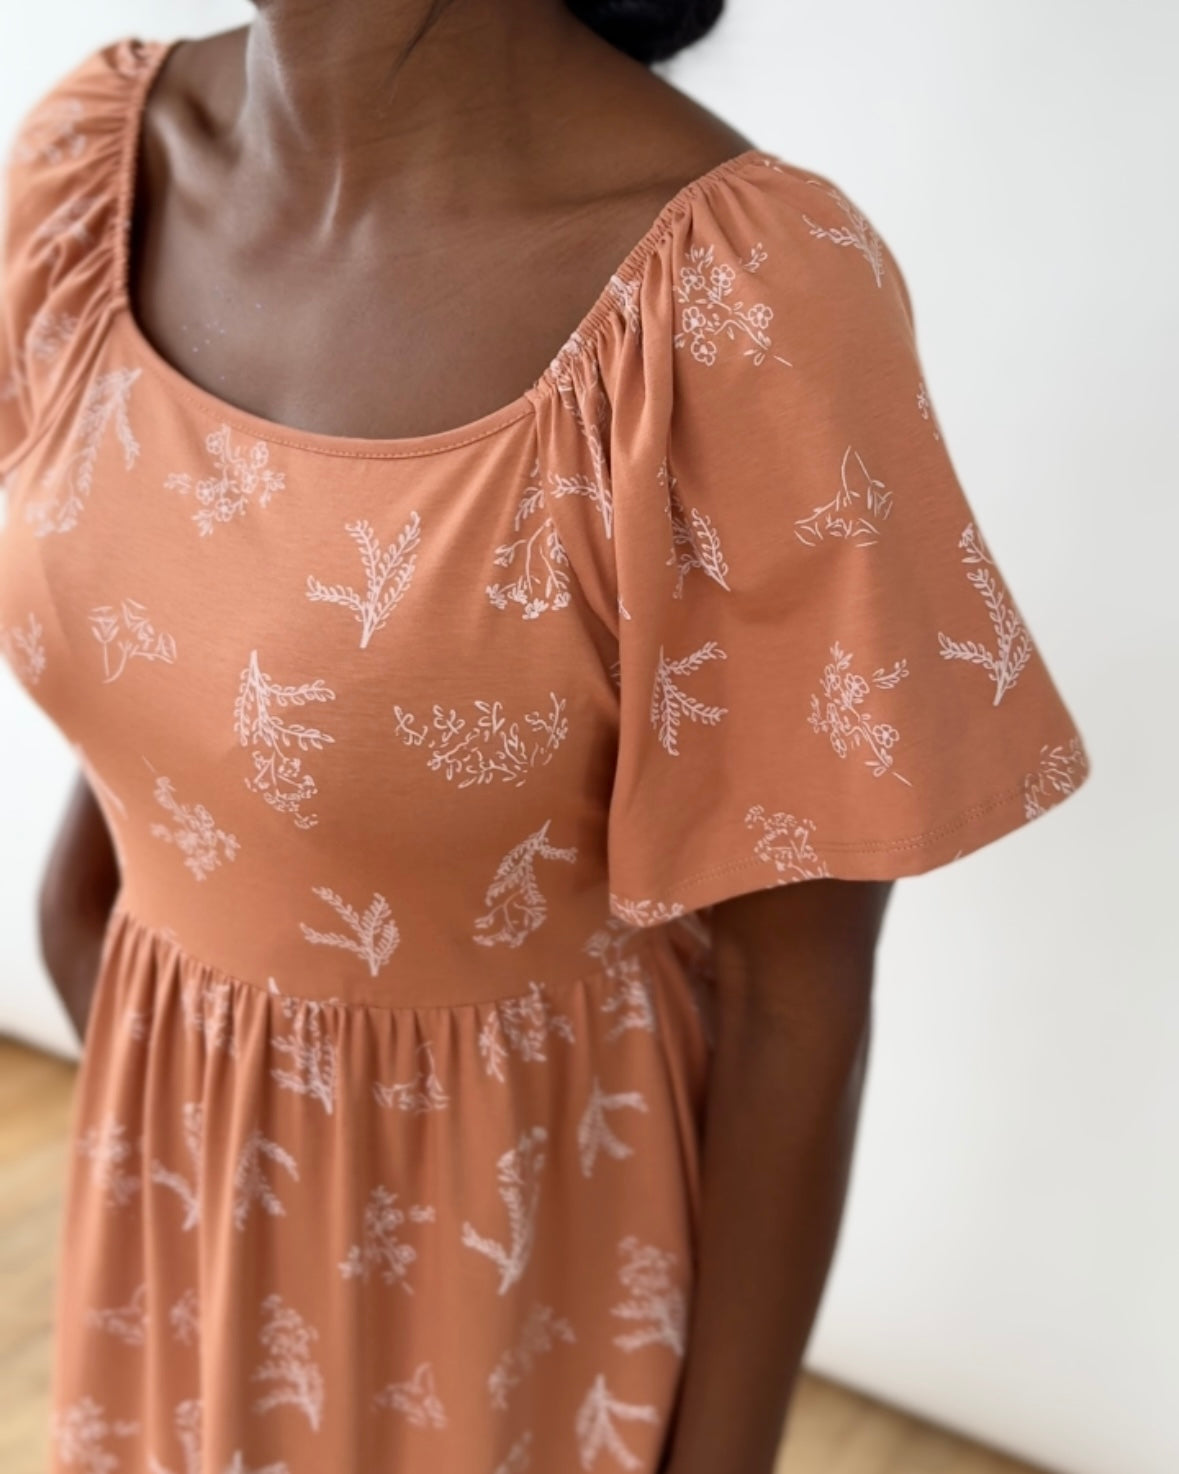 TALLY printed dress in Italian Clay/White